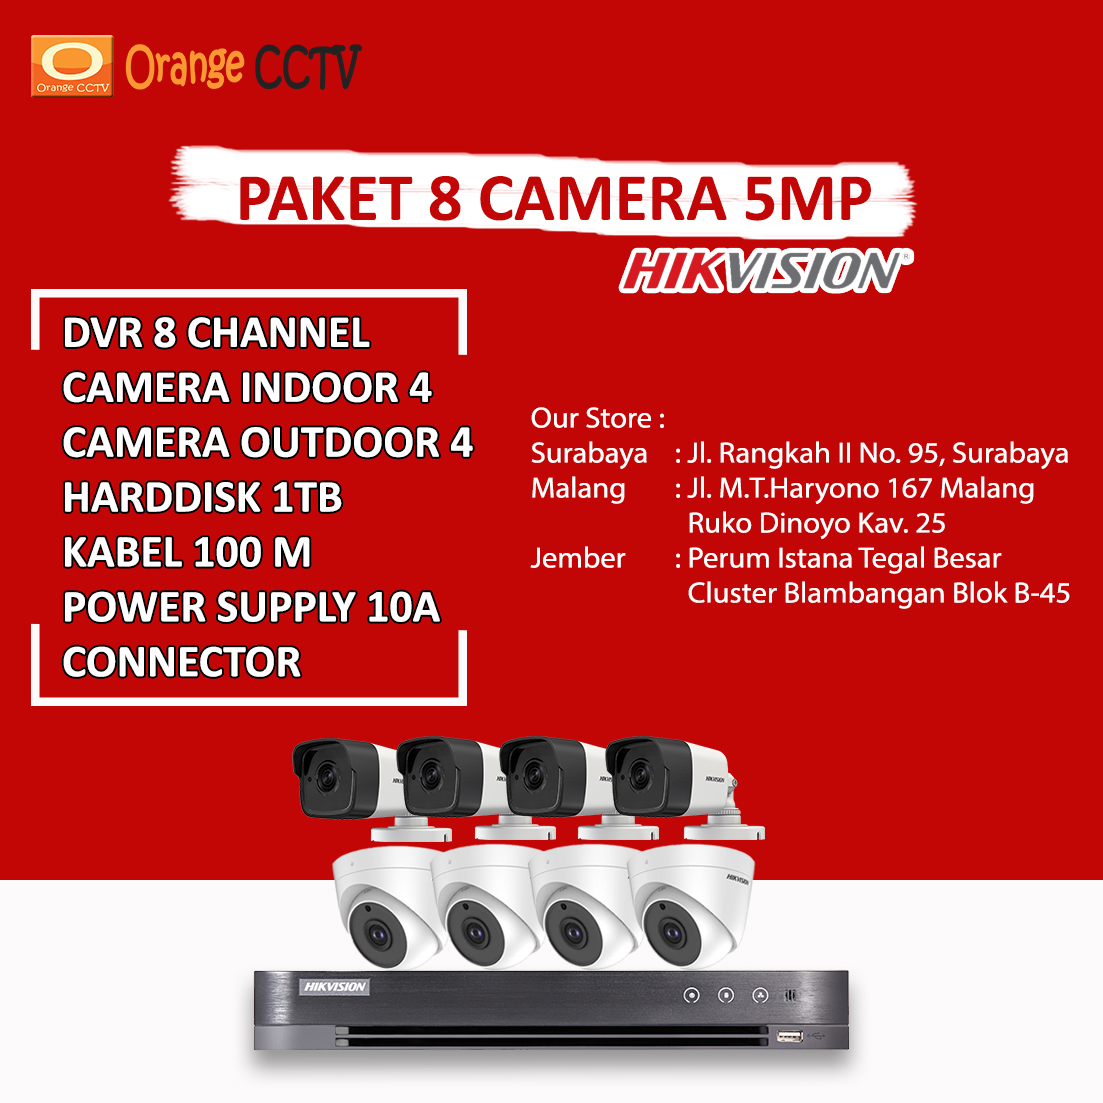 Paket 8 Kamera Hikvision 5MP - CCTV Murah, Spy Cam, Kamera CCTV